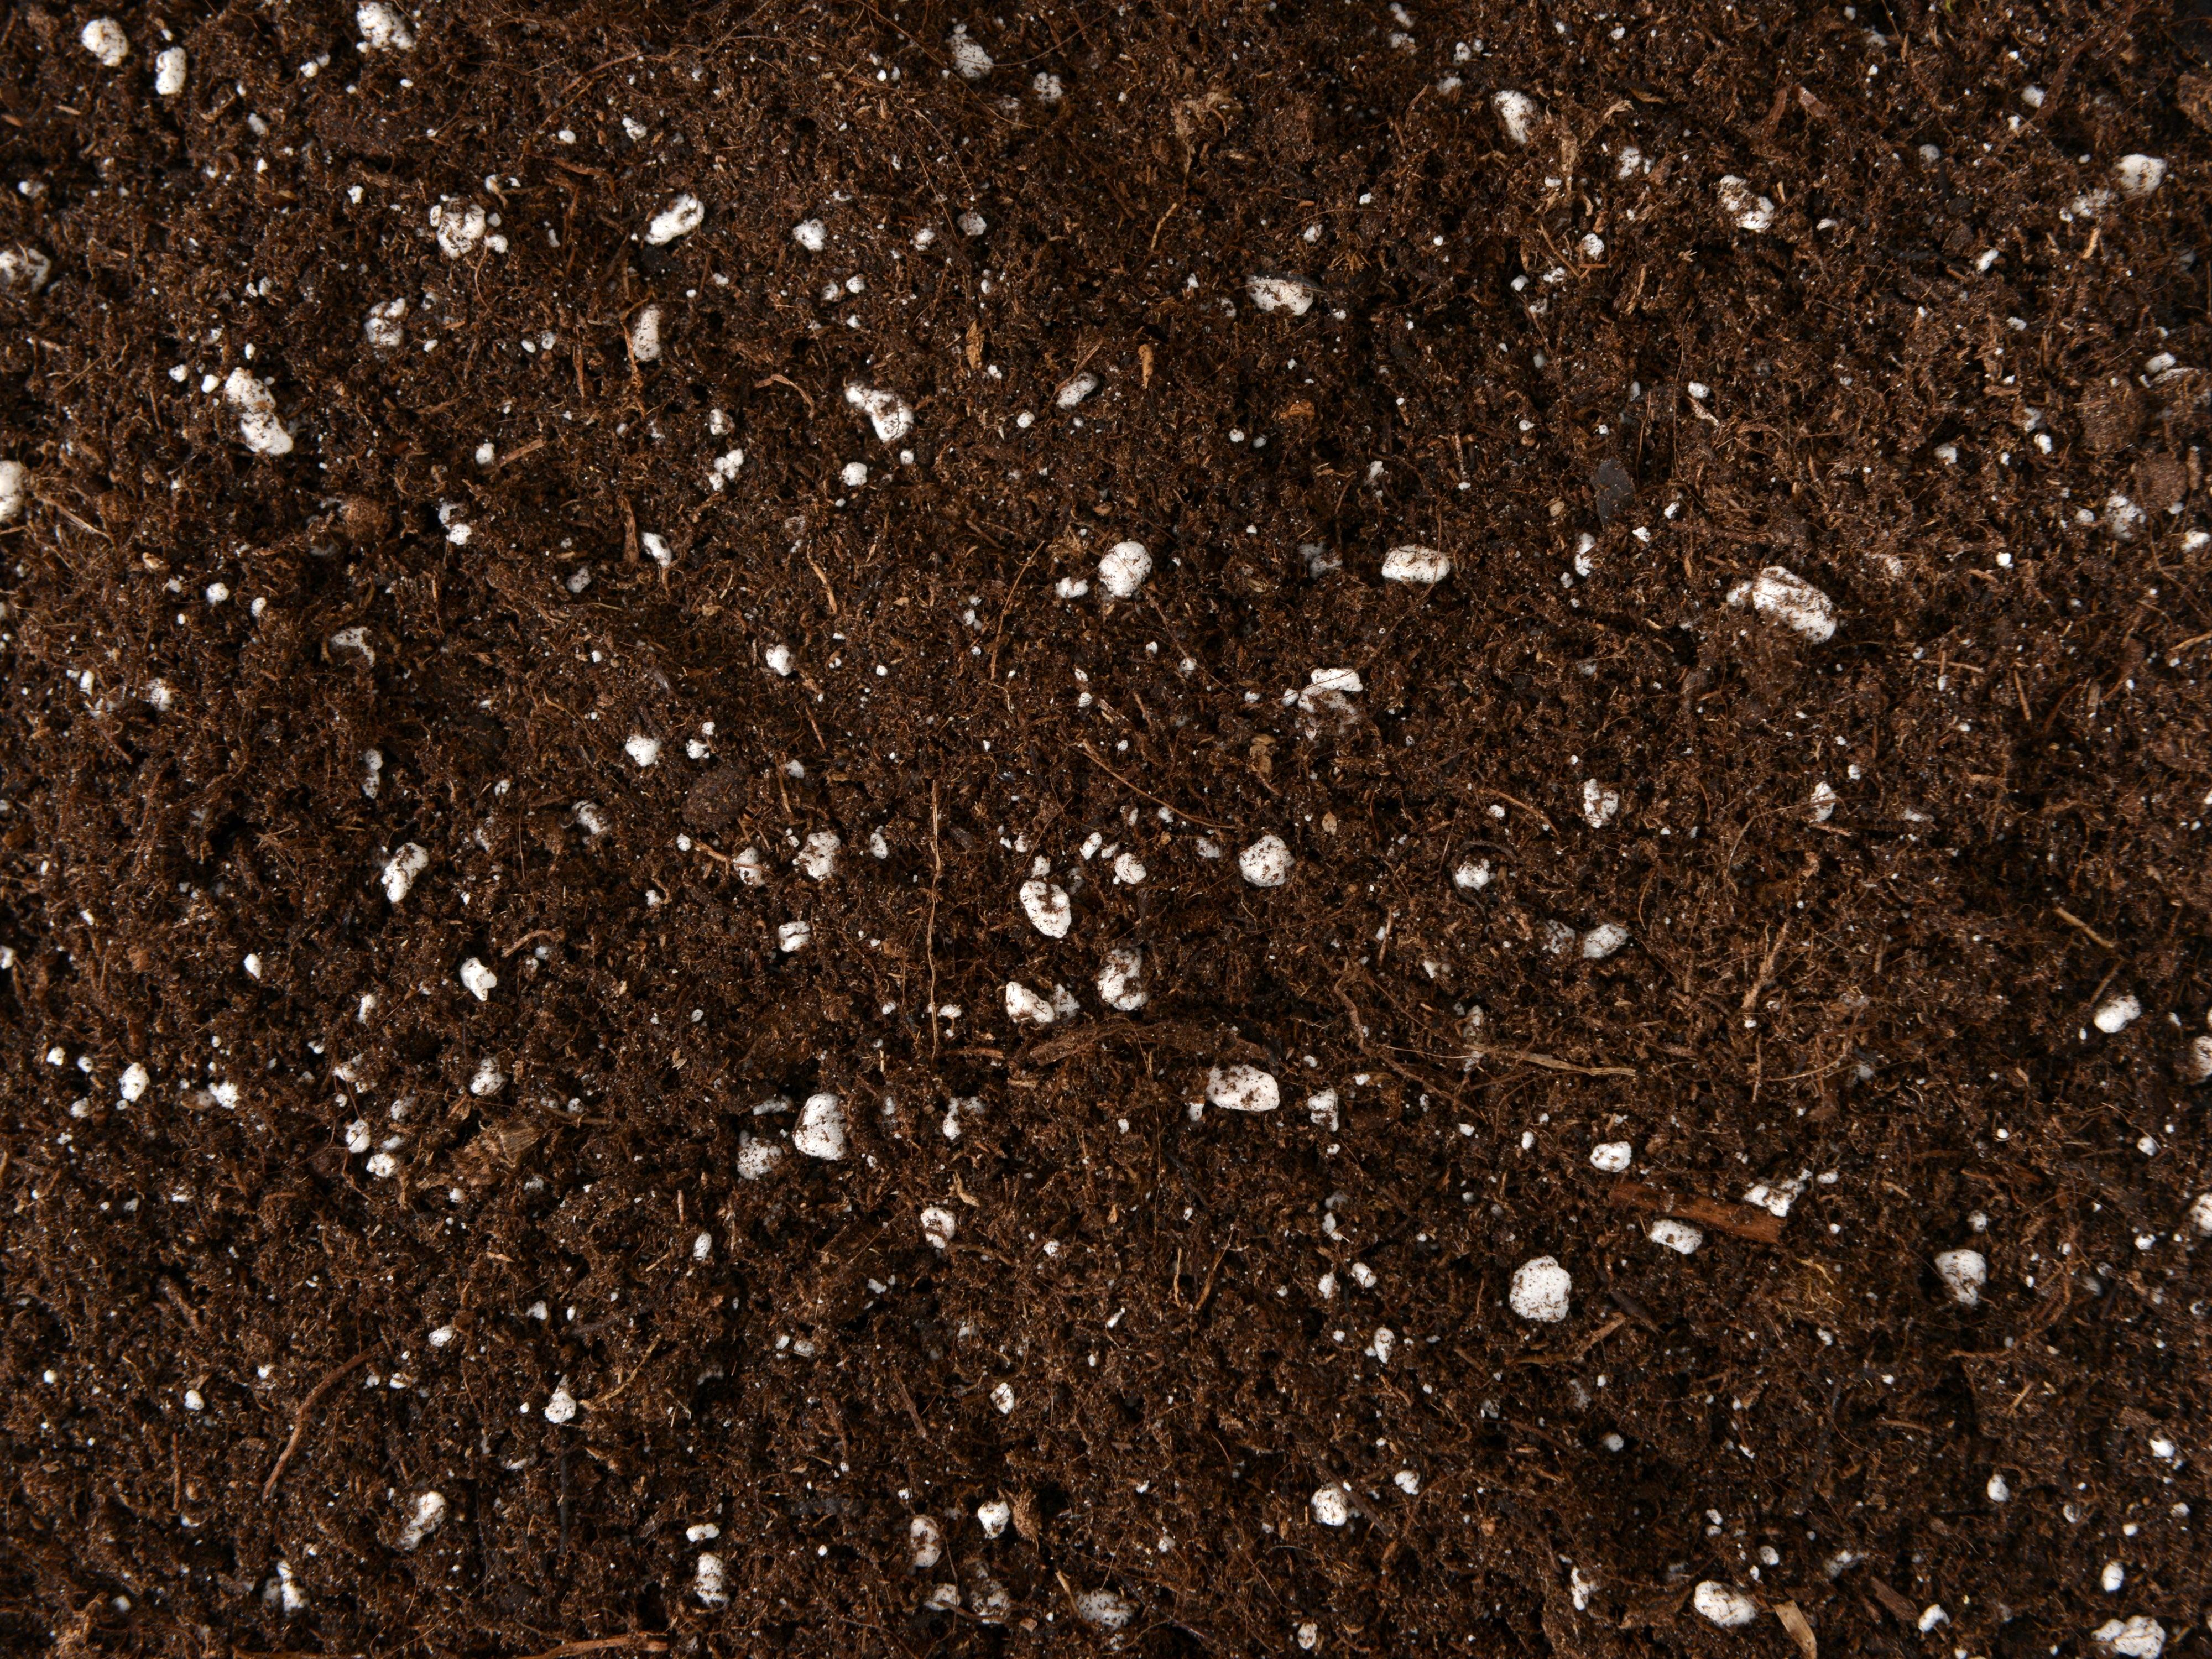 Substrate mix for terrariums (Soil mix for terrariums) 